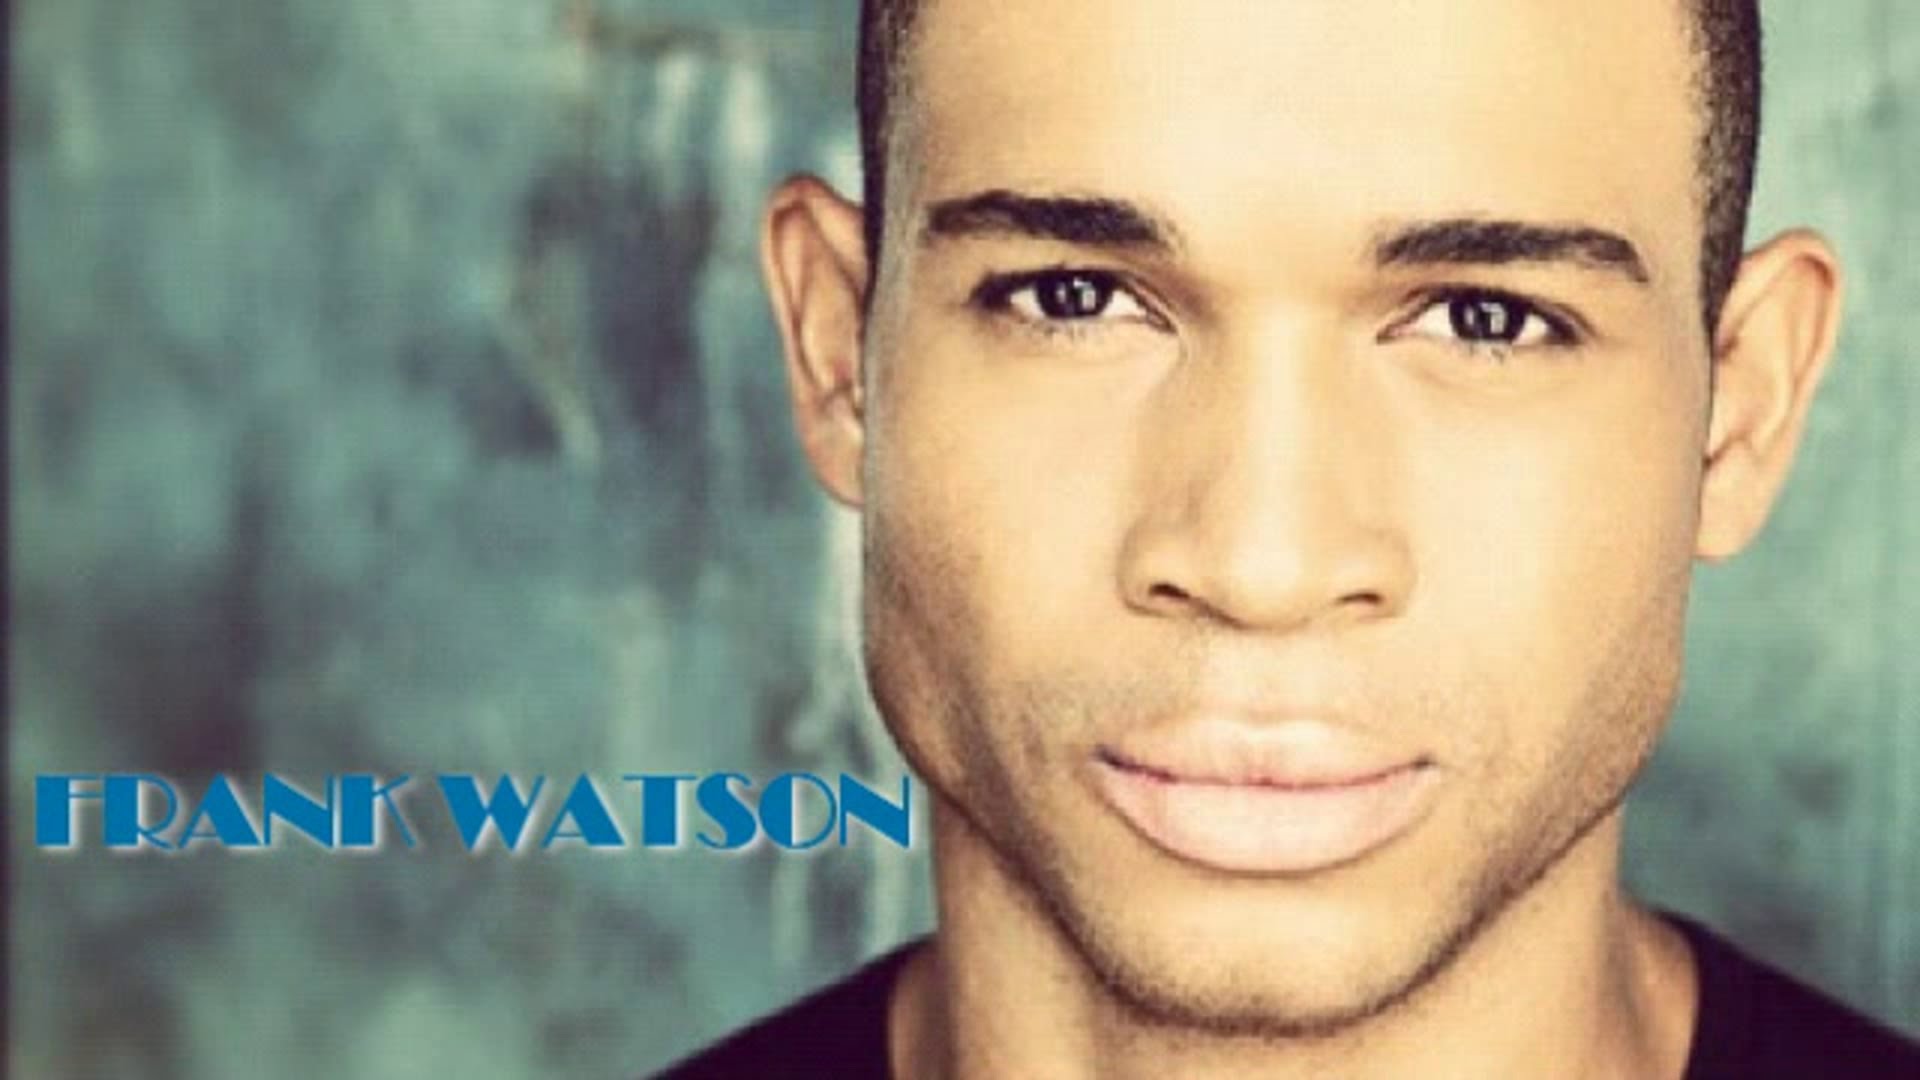 william-watson-actor-images